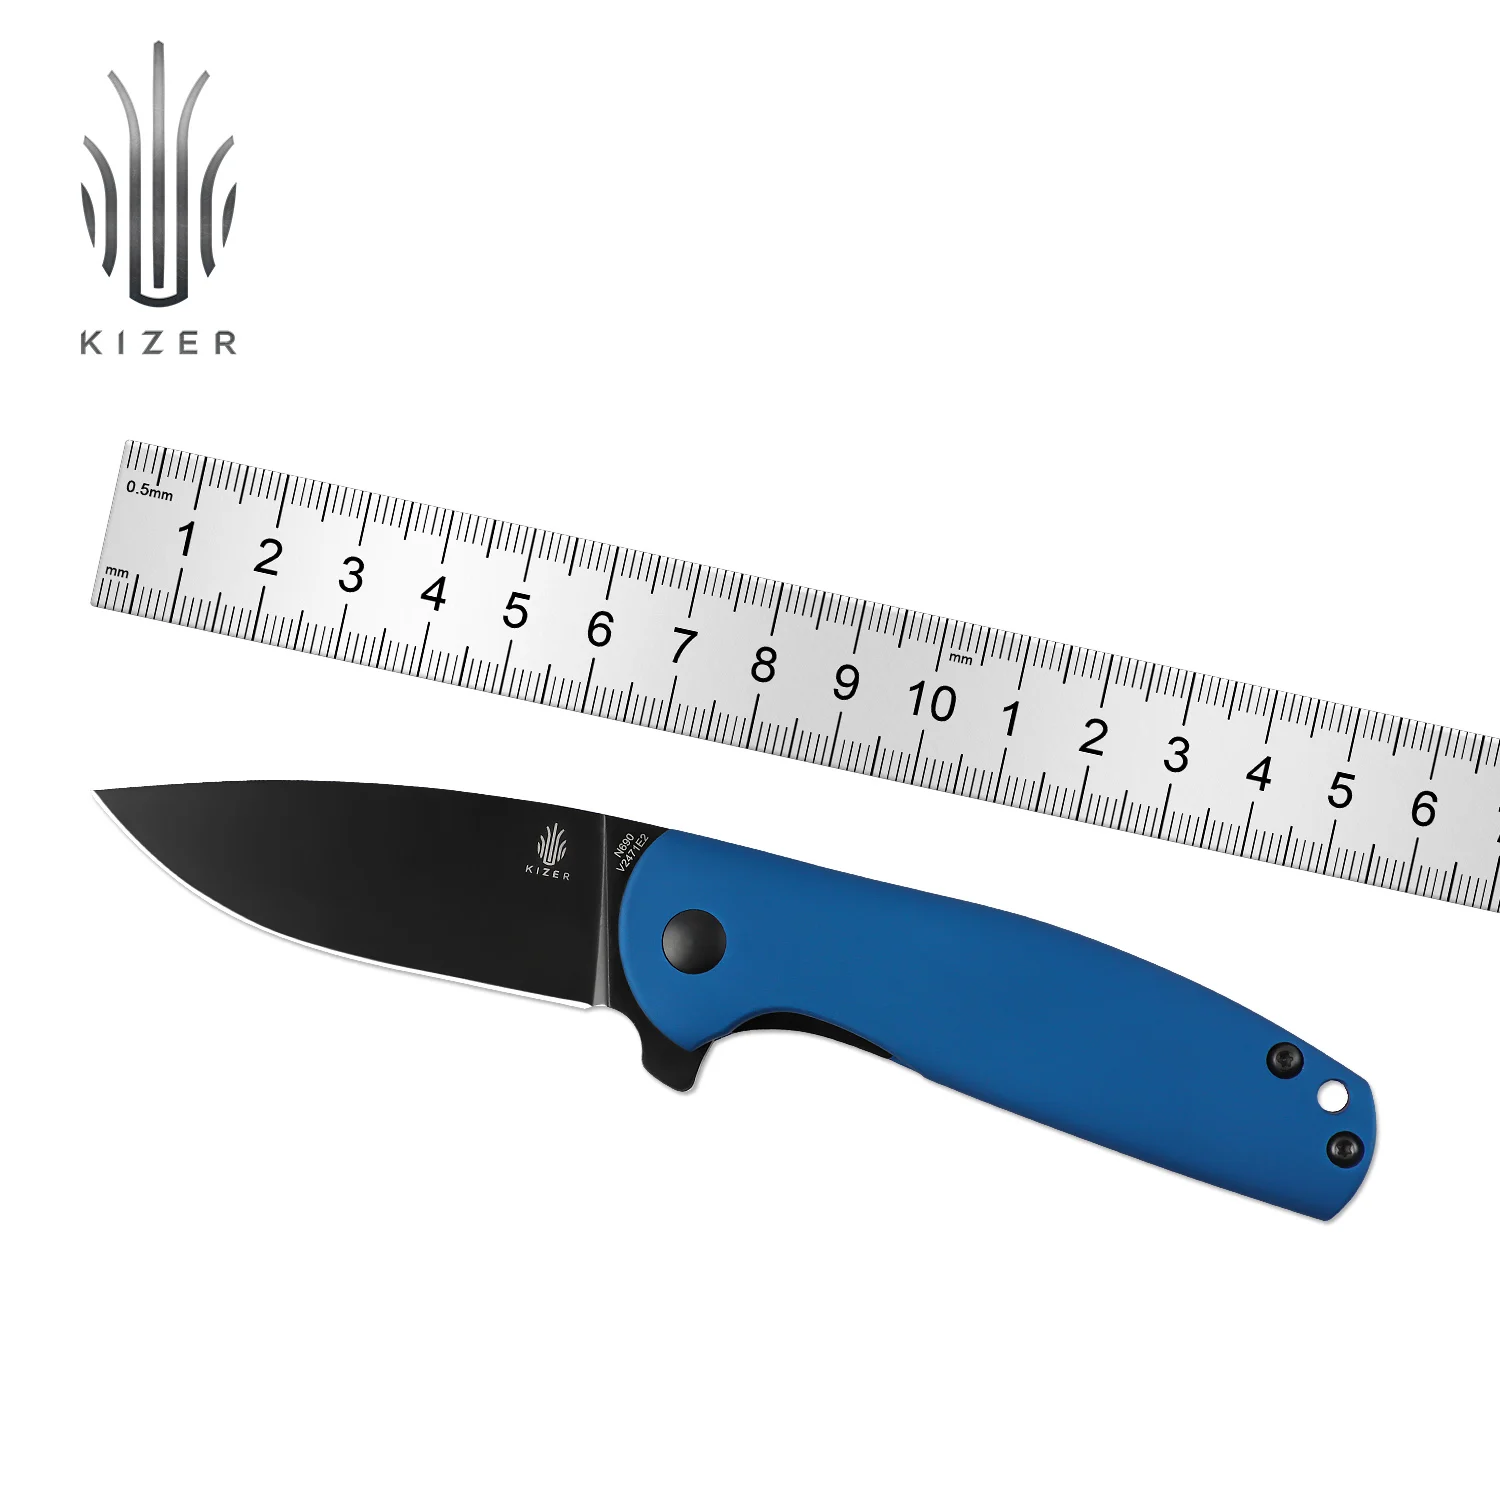 Kizer Mojave Exclusive Gemini Mini V2471E2 Blue Matte Aluminum Survival Knife Black Coated N690 Blade Hunting Knife for Outdoor